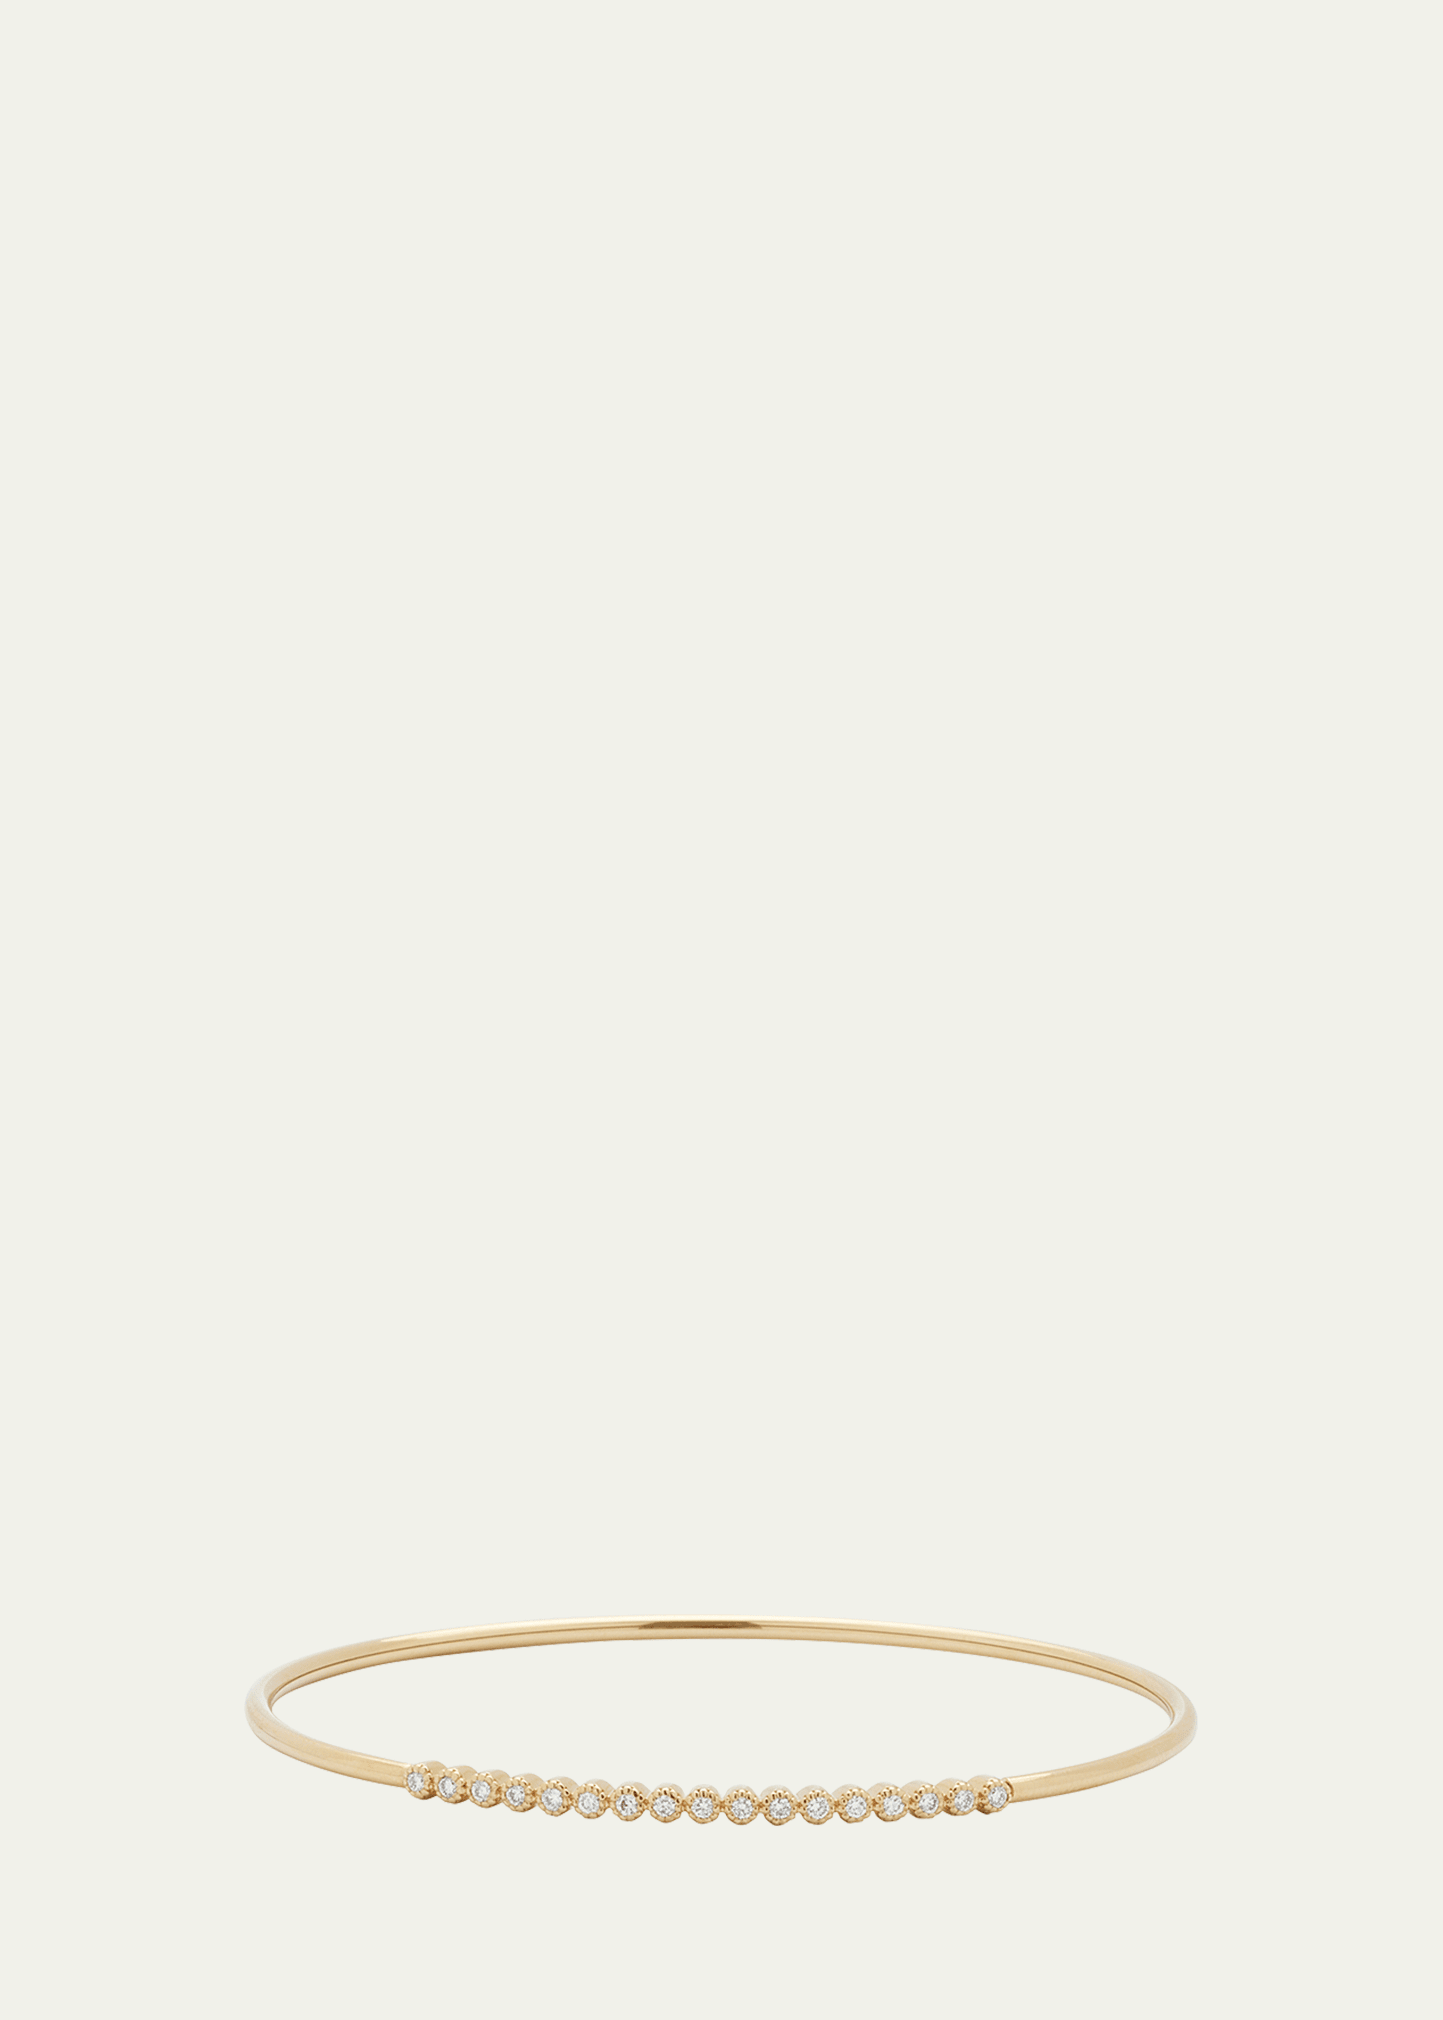 Flexible Stitch Tubing Bracelet in 18k Yellow Gold with Diamonds, Size L